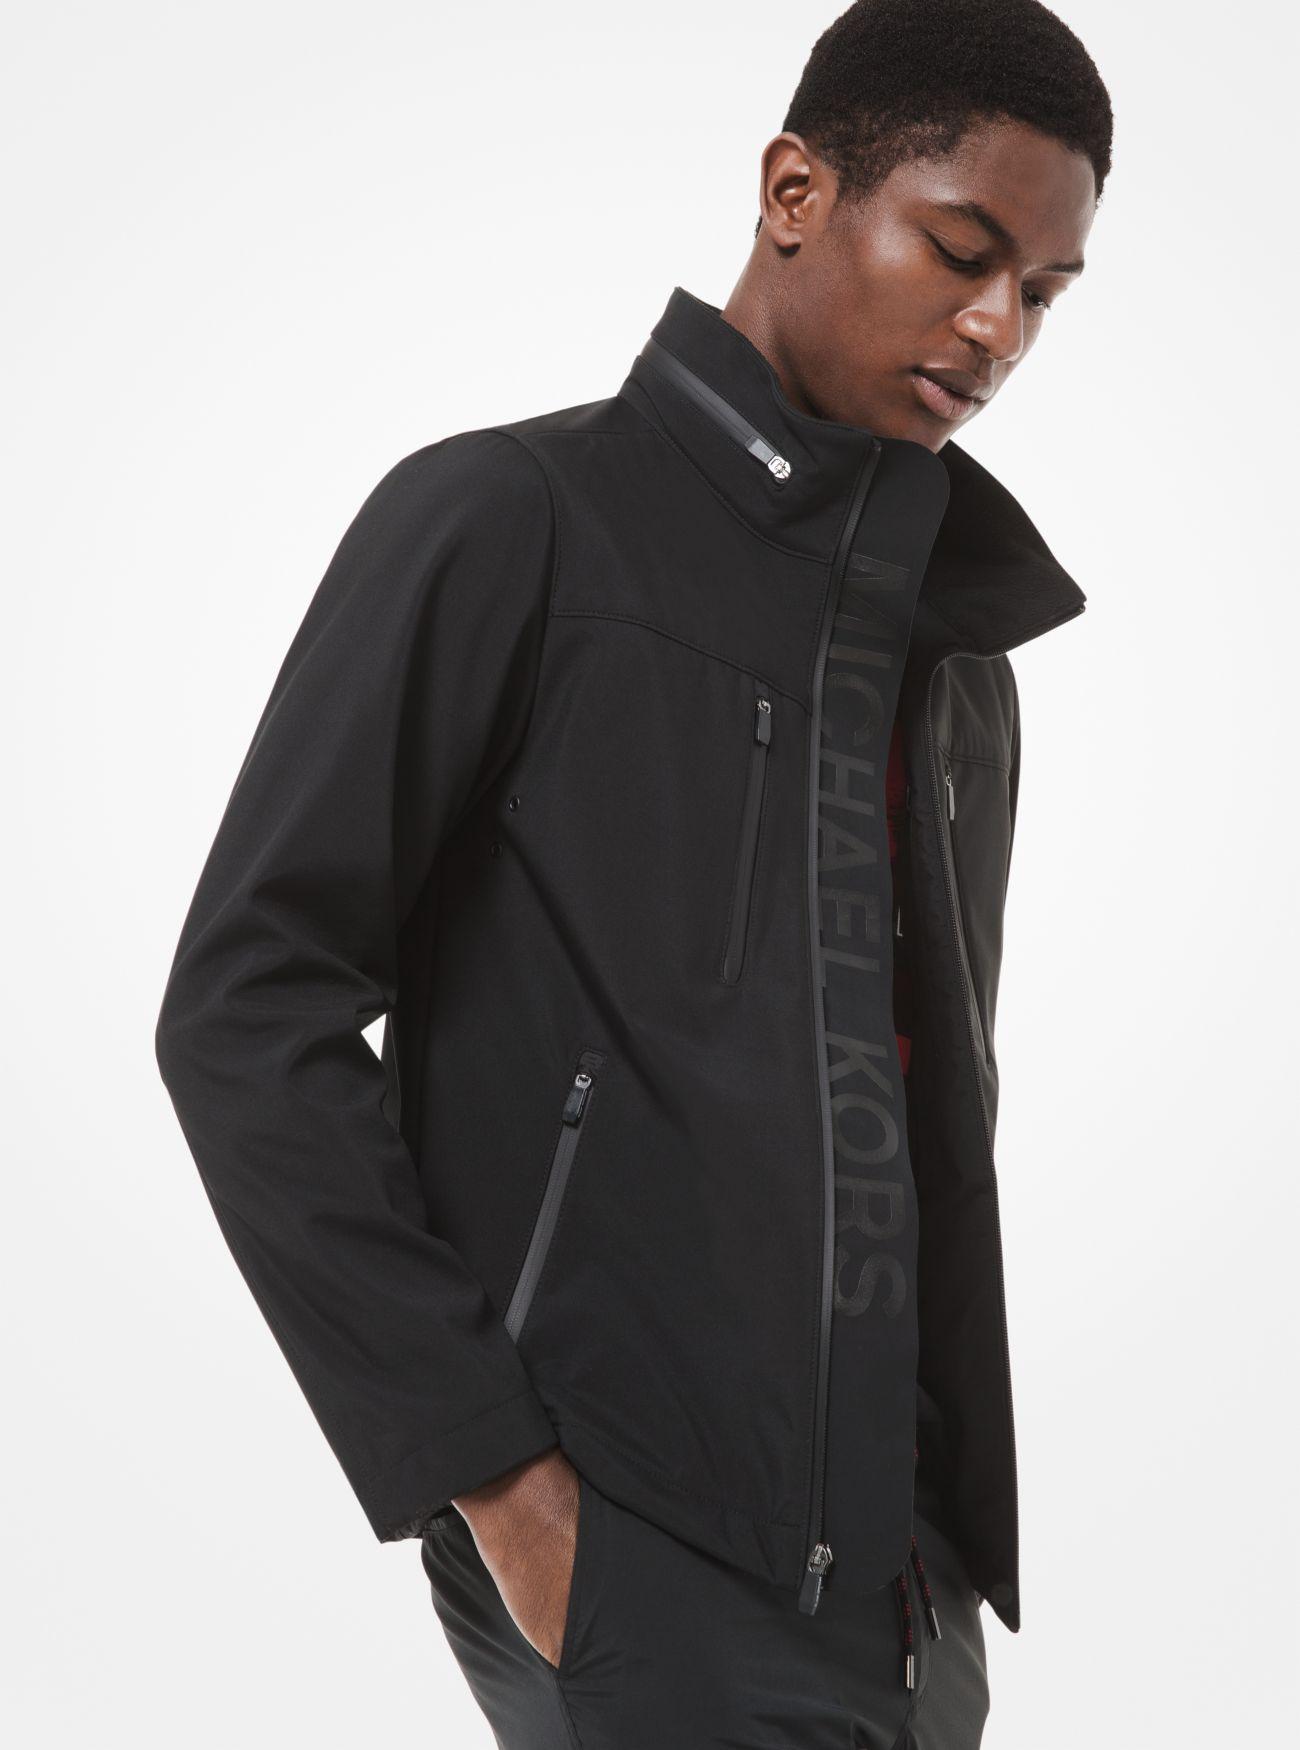 michael kors men's black jacket